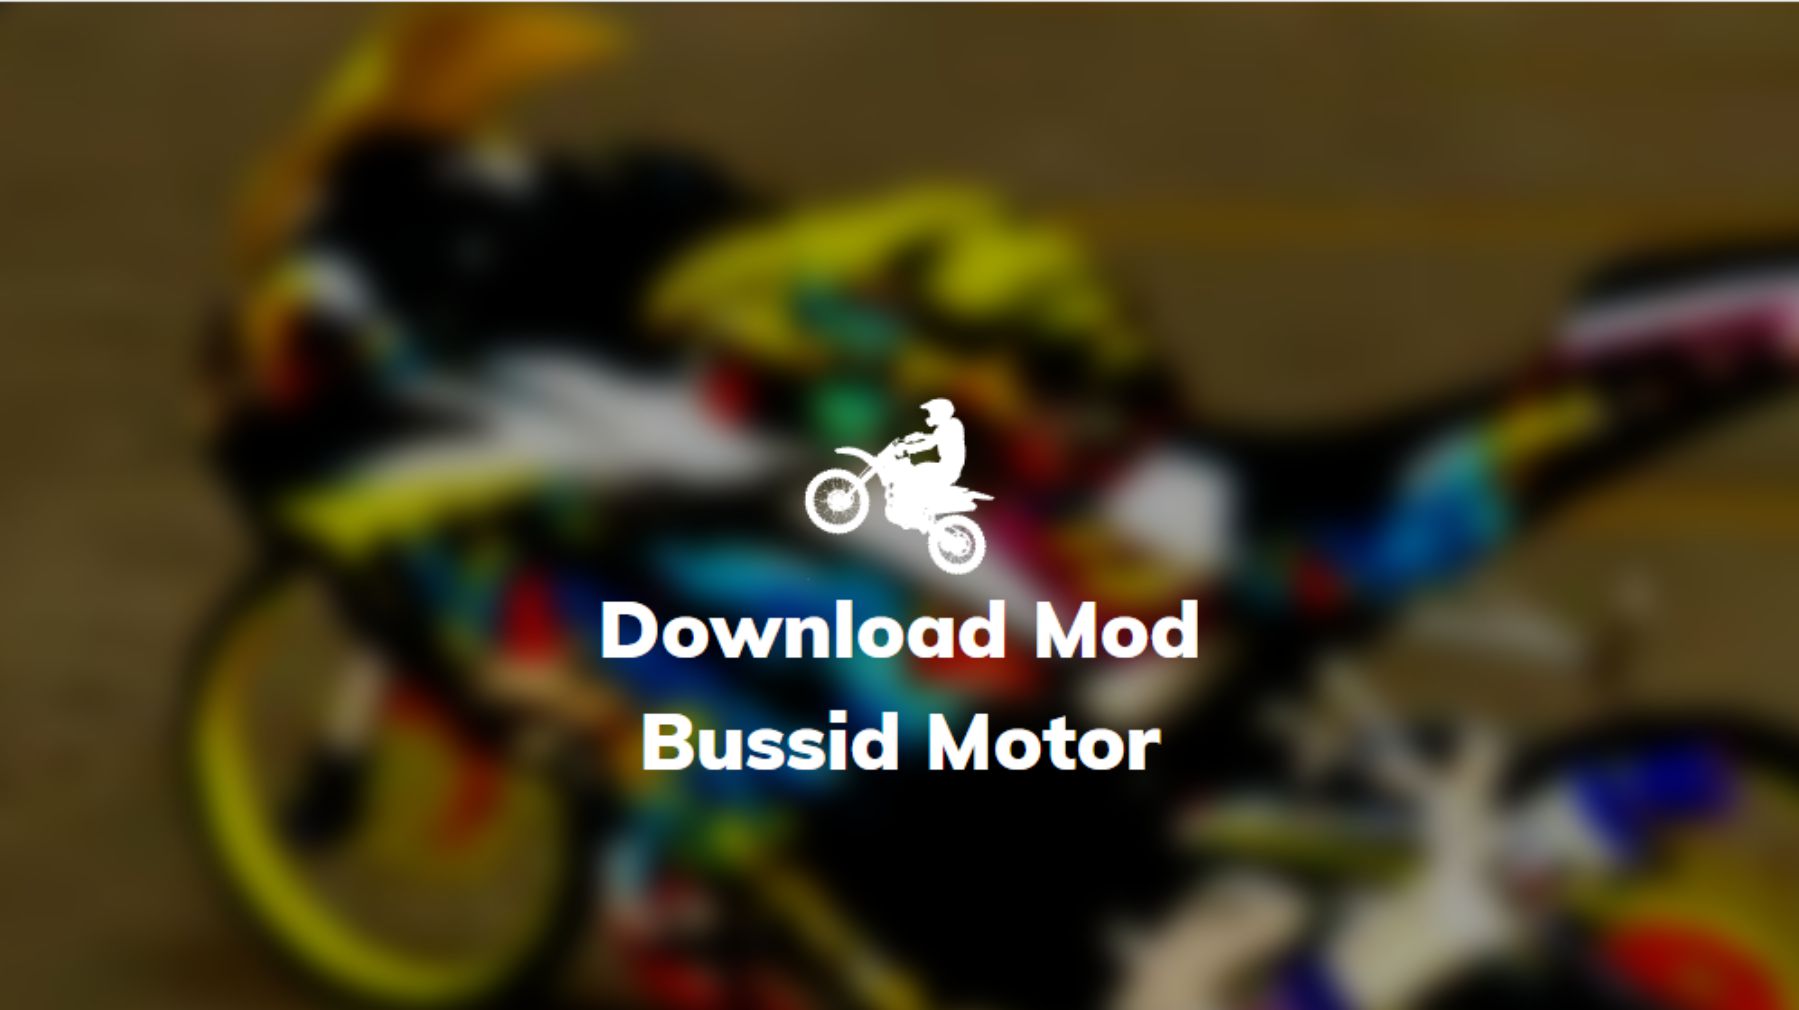 Download Mod Bussid Motor Drag Satria Fu. √ Download Mod Bussid Motor (Drag, Moge, Matic, Ninja, CB, RX dll)